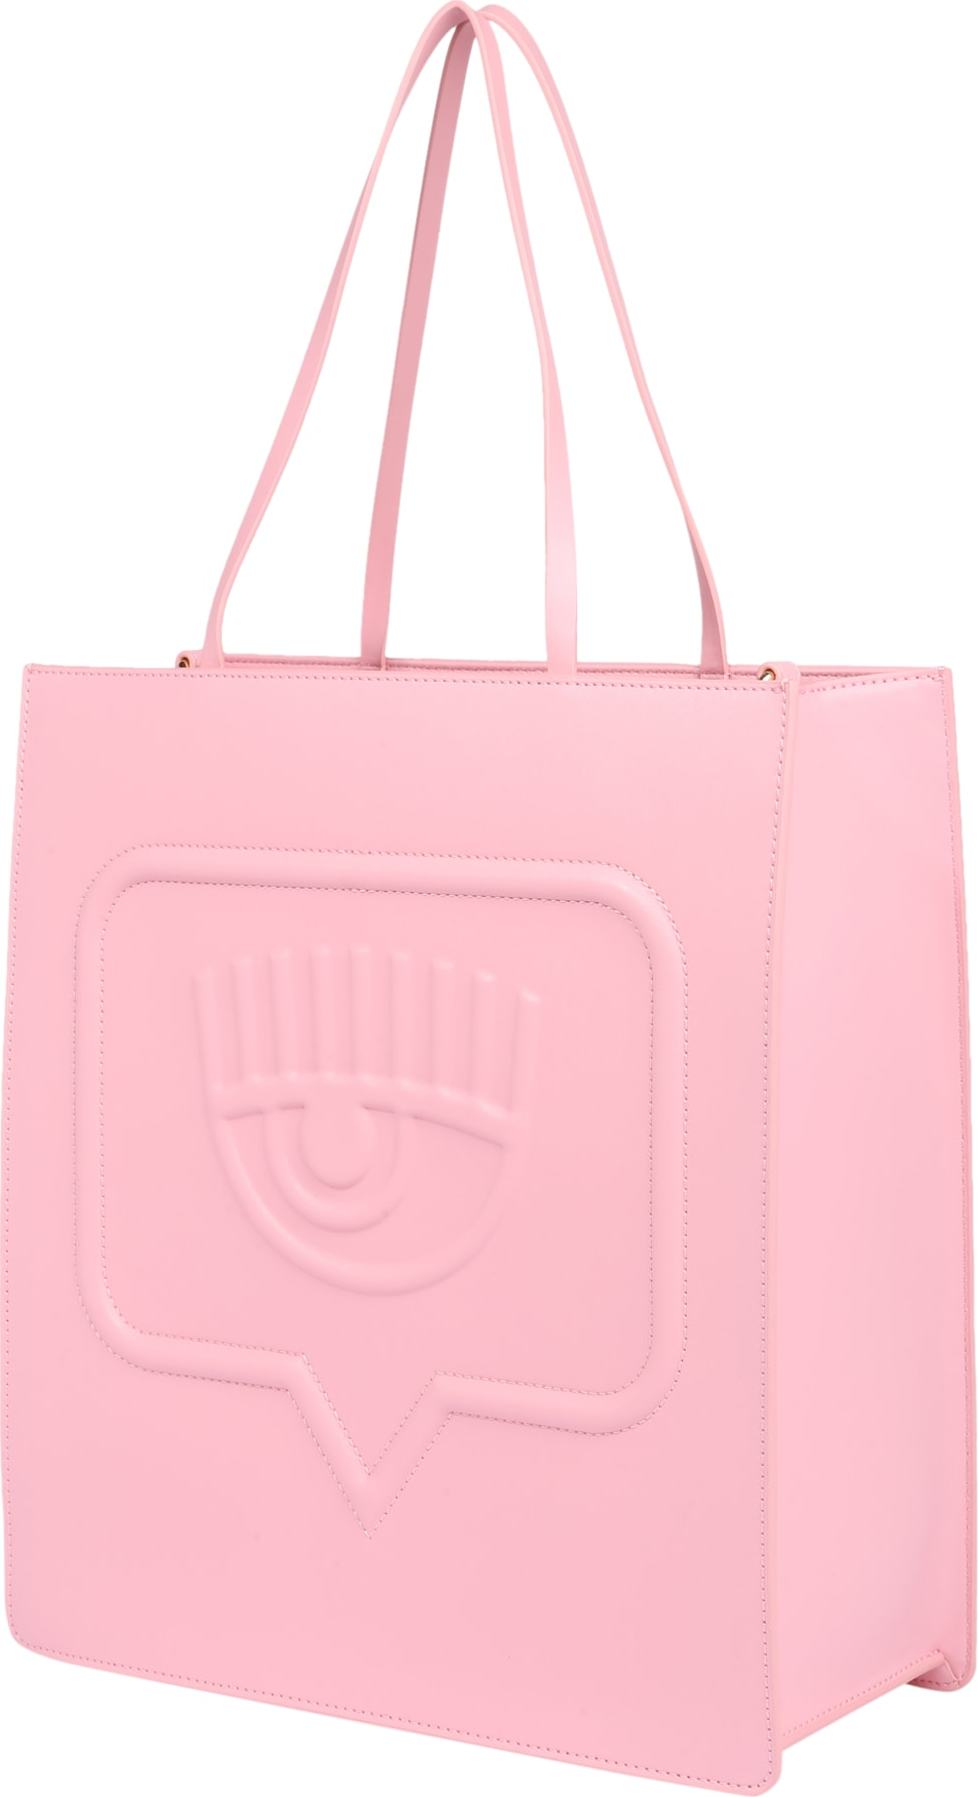 Chiara Ferragni Nákupní taška růžová